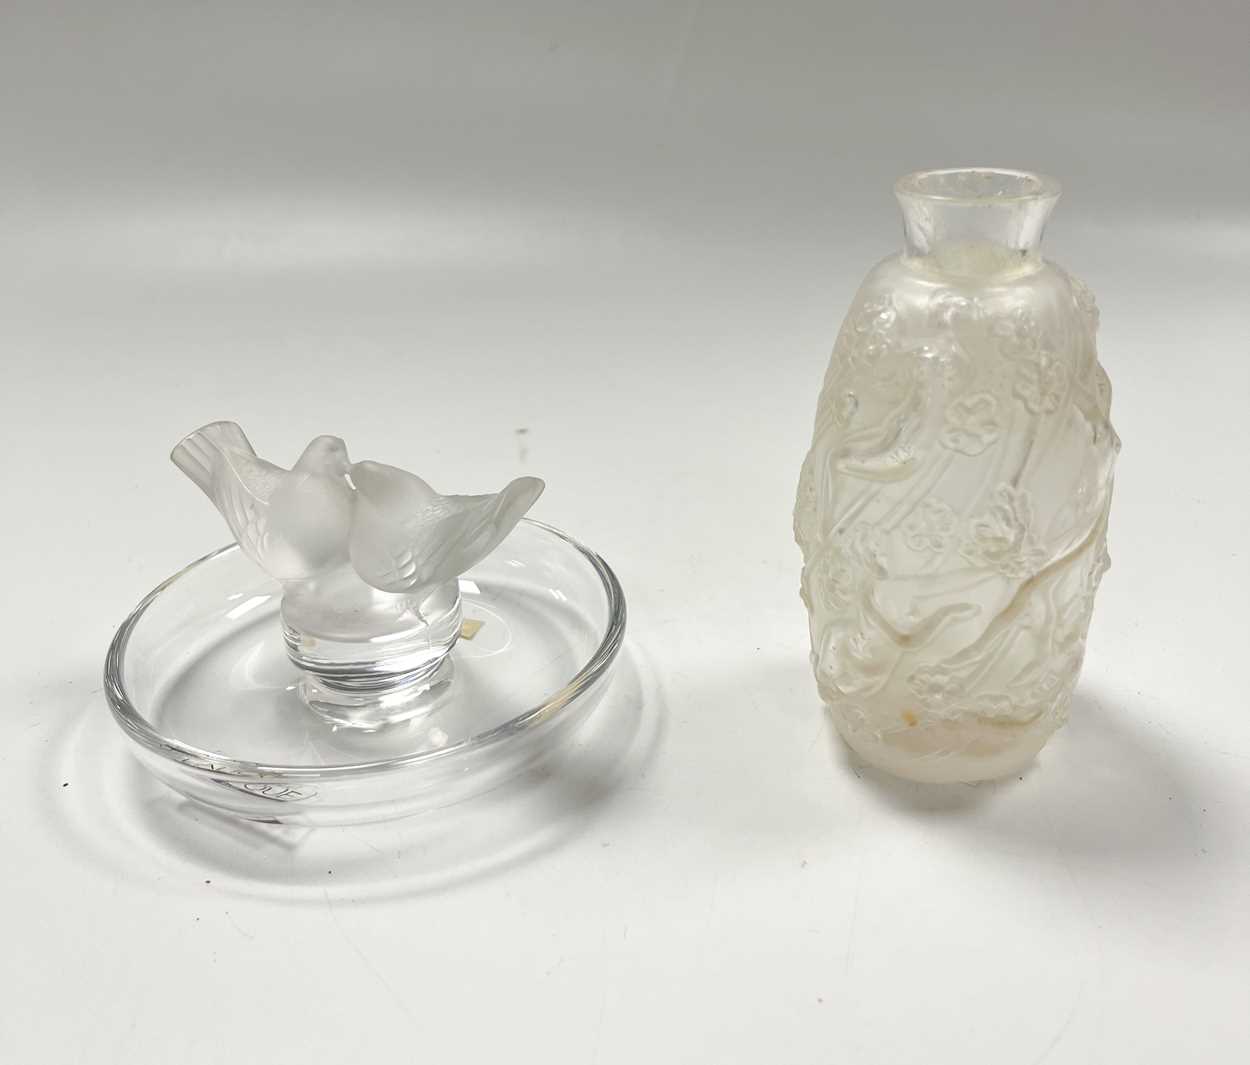 Femme Fleurs, a Lalique frosted glass bud vase, - Image 3 of 9